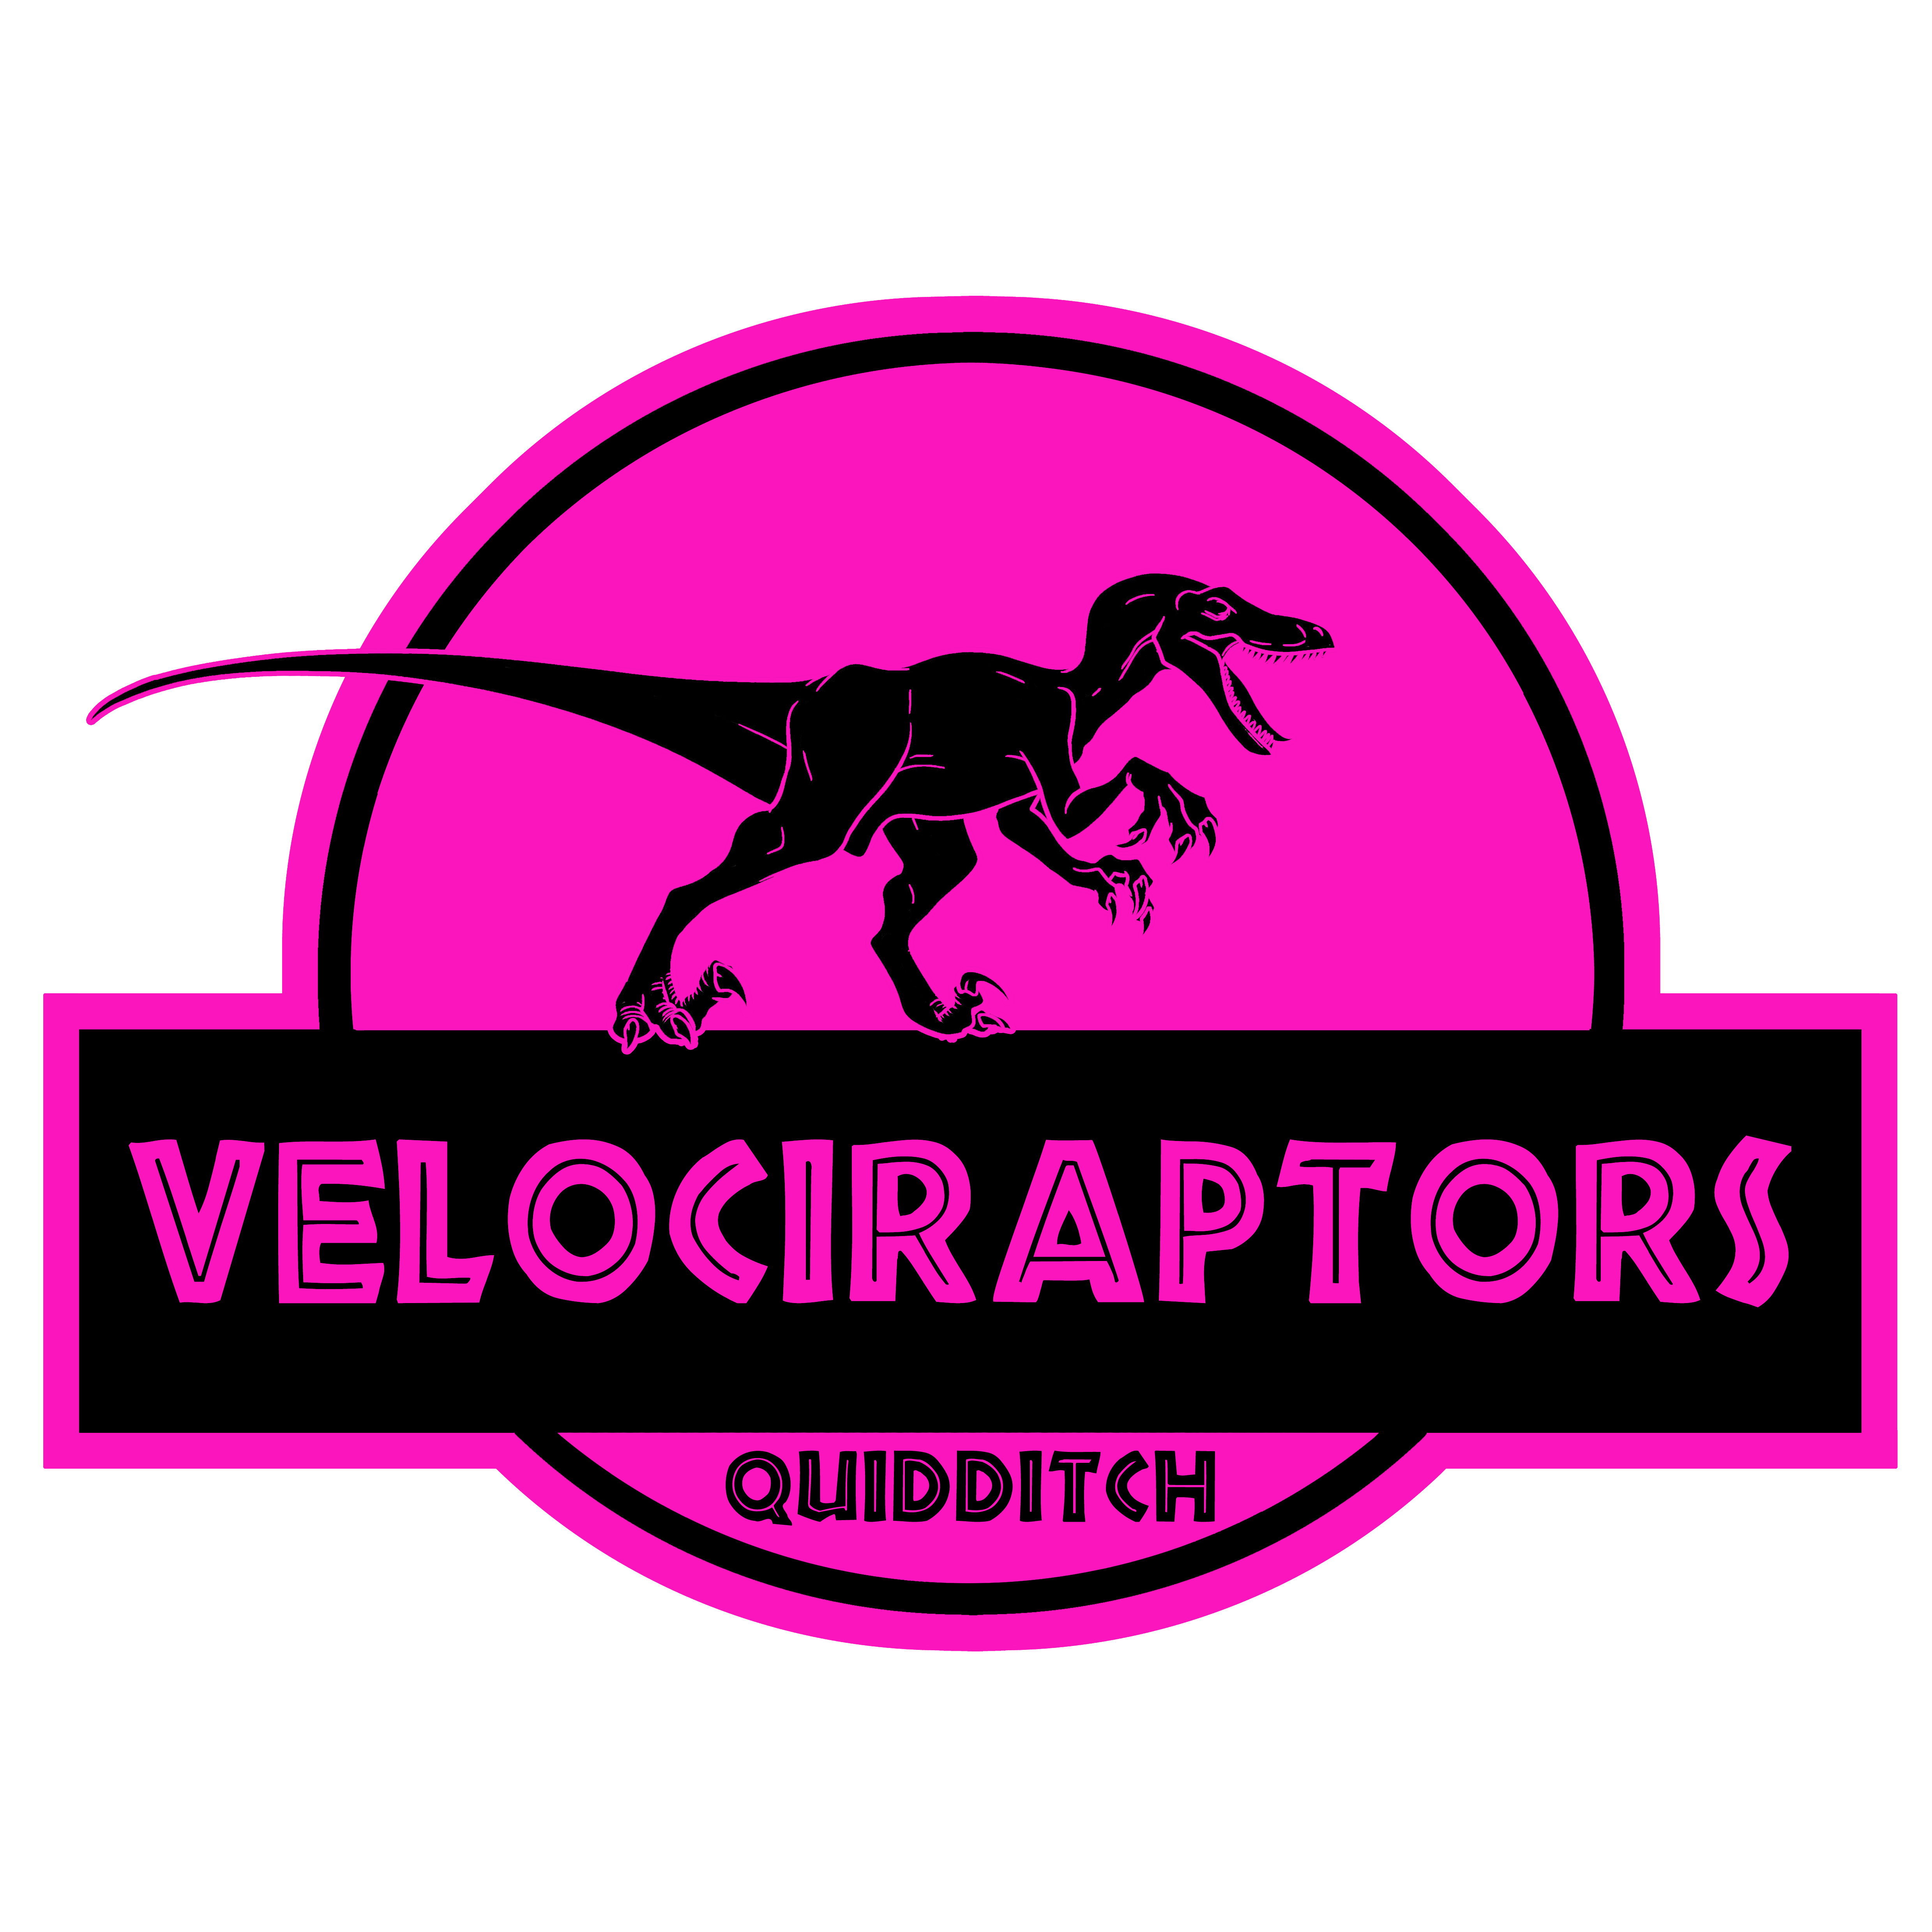 Velociraptors Quadball Club logo